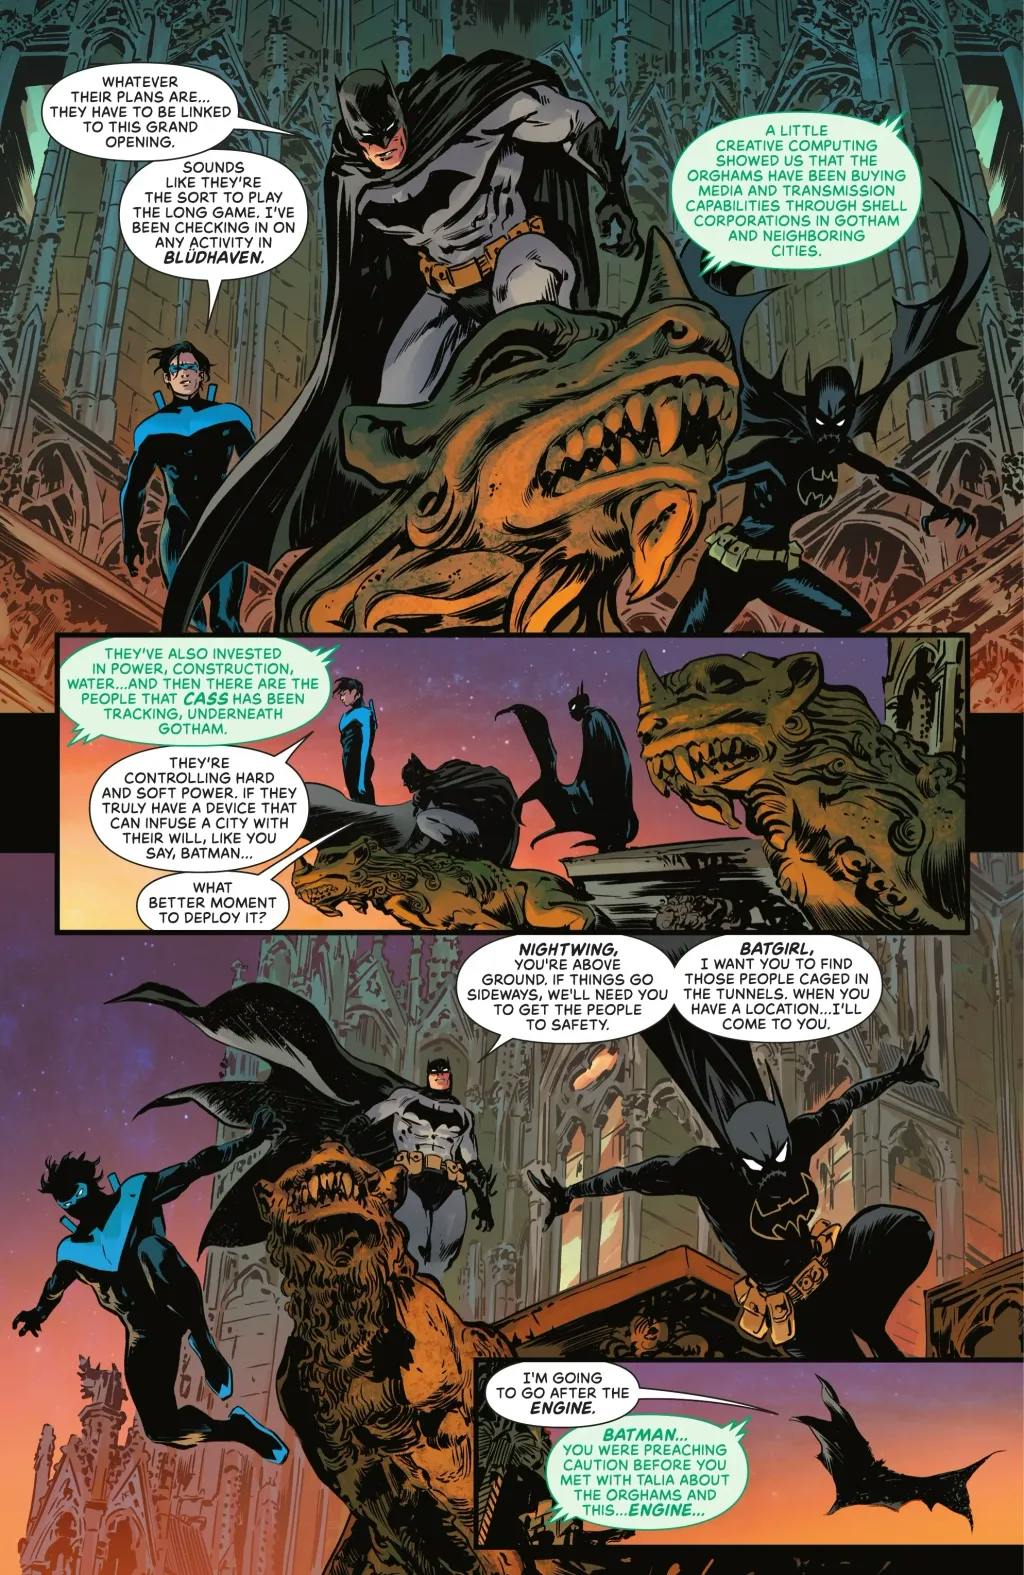 Detective Comics #1071 by Ram V